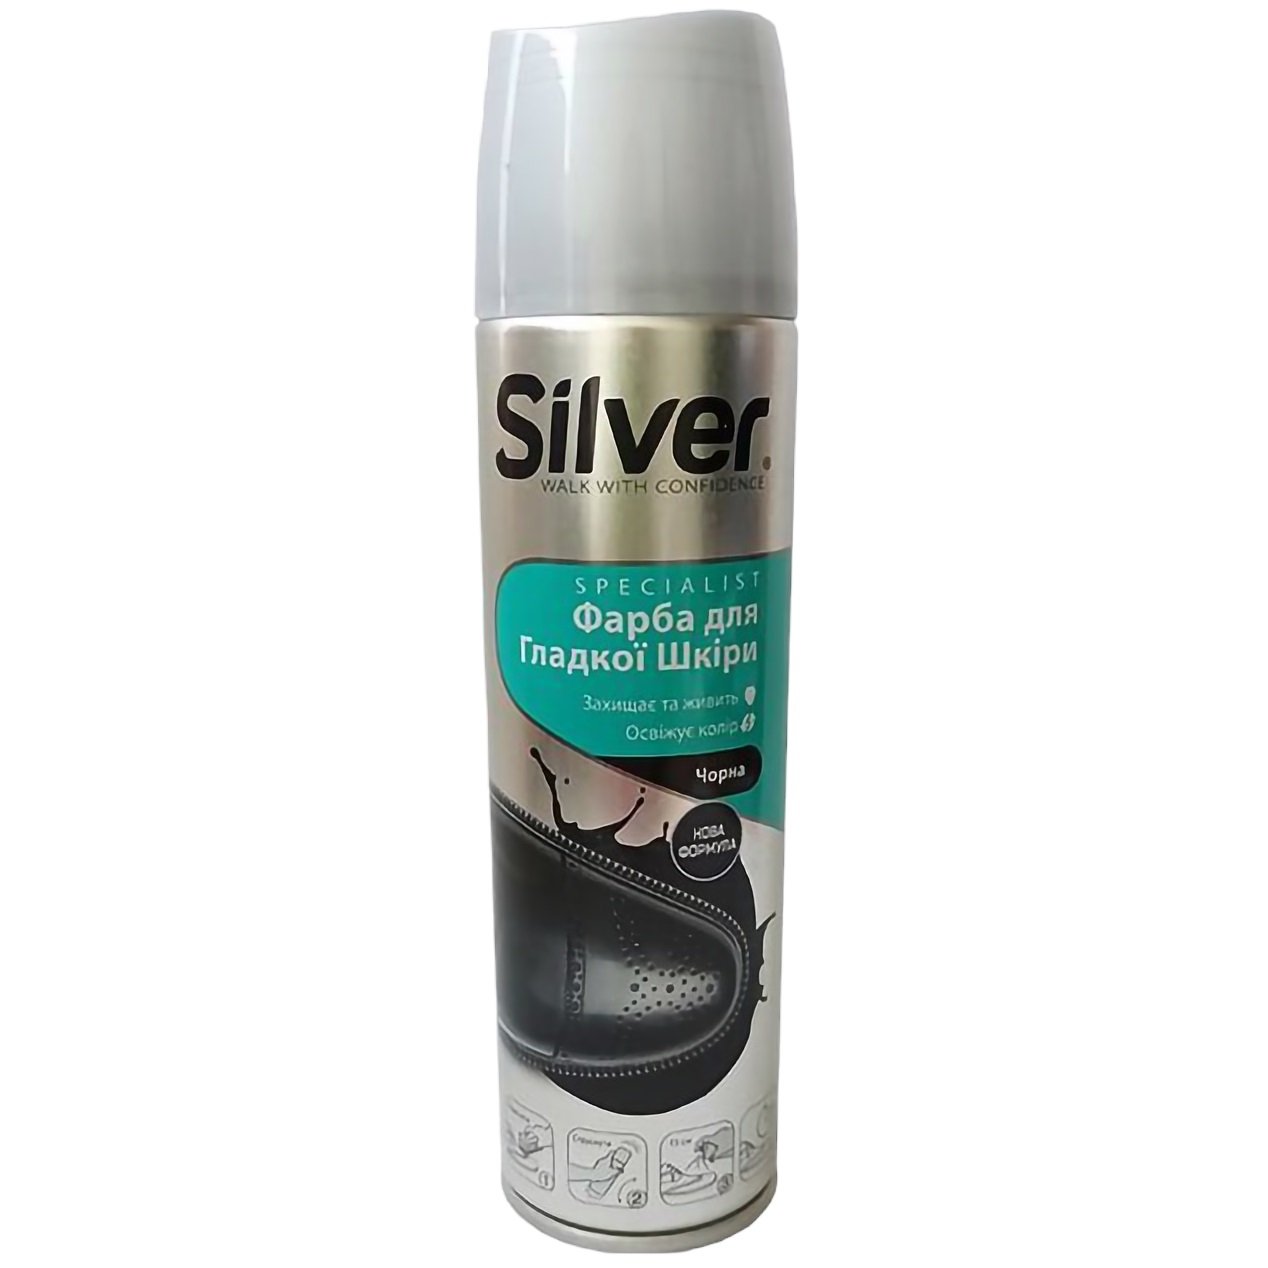 Краска для гладкой кожи Silver, черная, 250 мл - фото 1